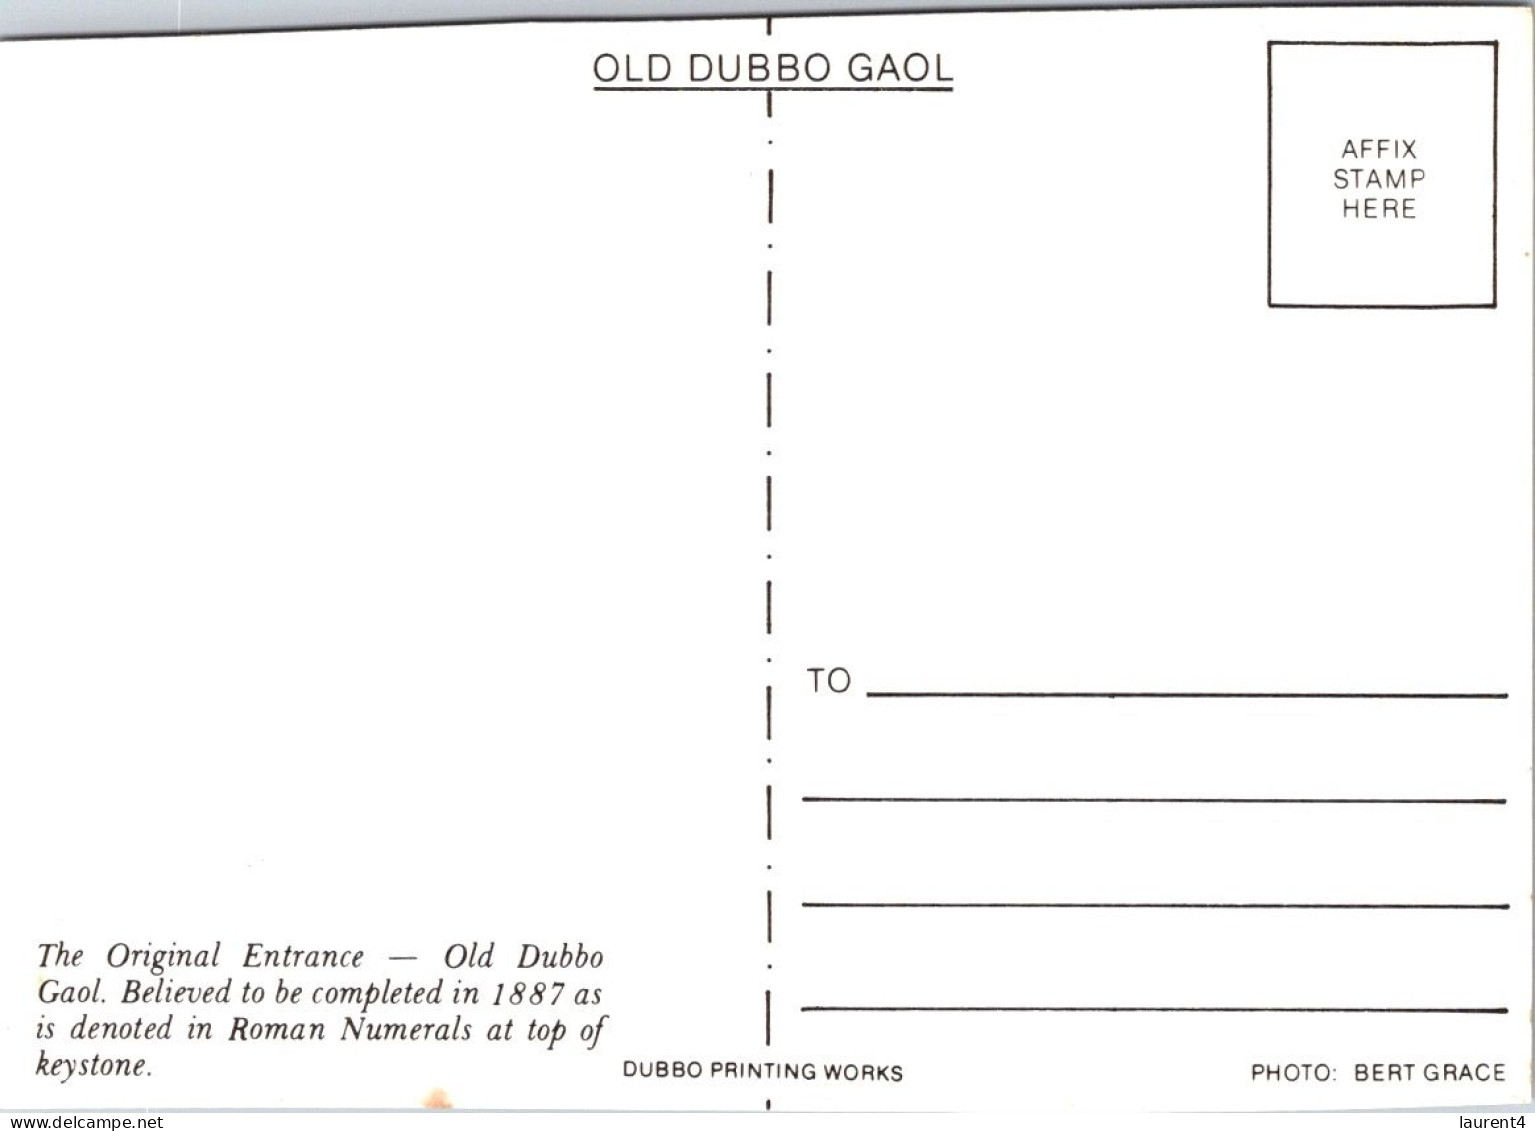 18-2-2024 (4 X 30) Australia - NSW - Old Dubbo Gaol - Dubbo